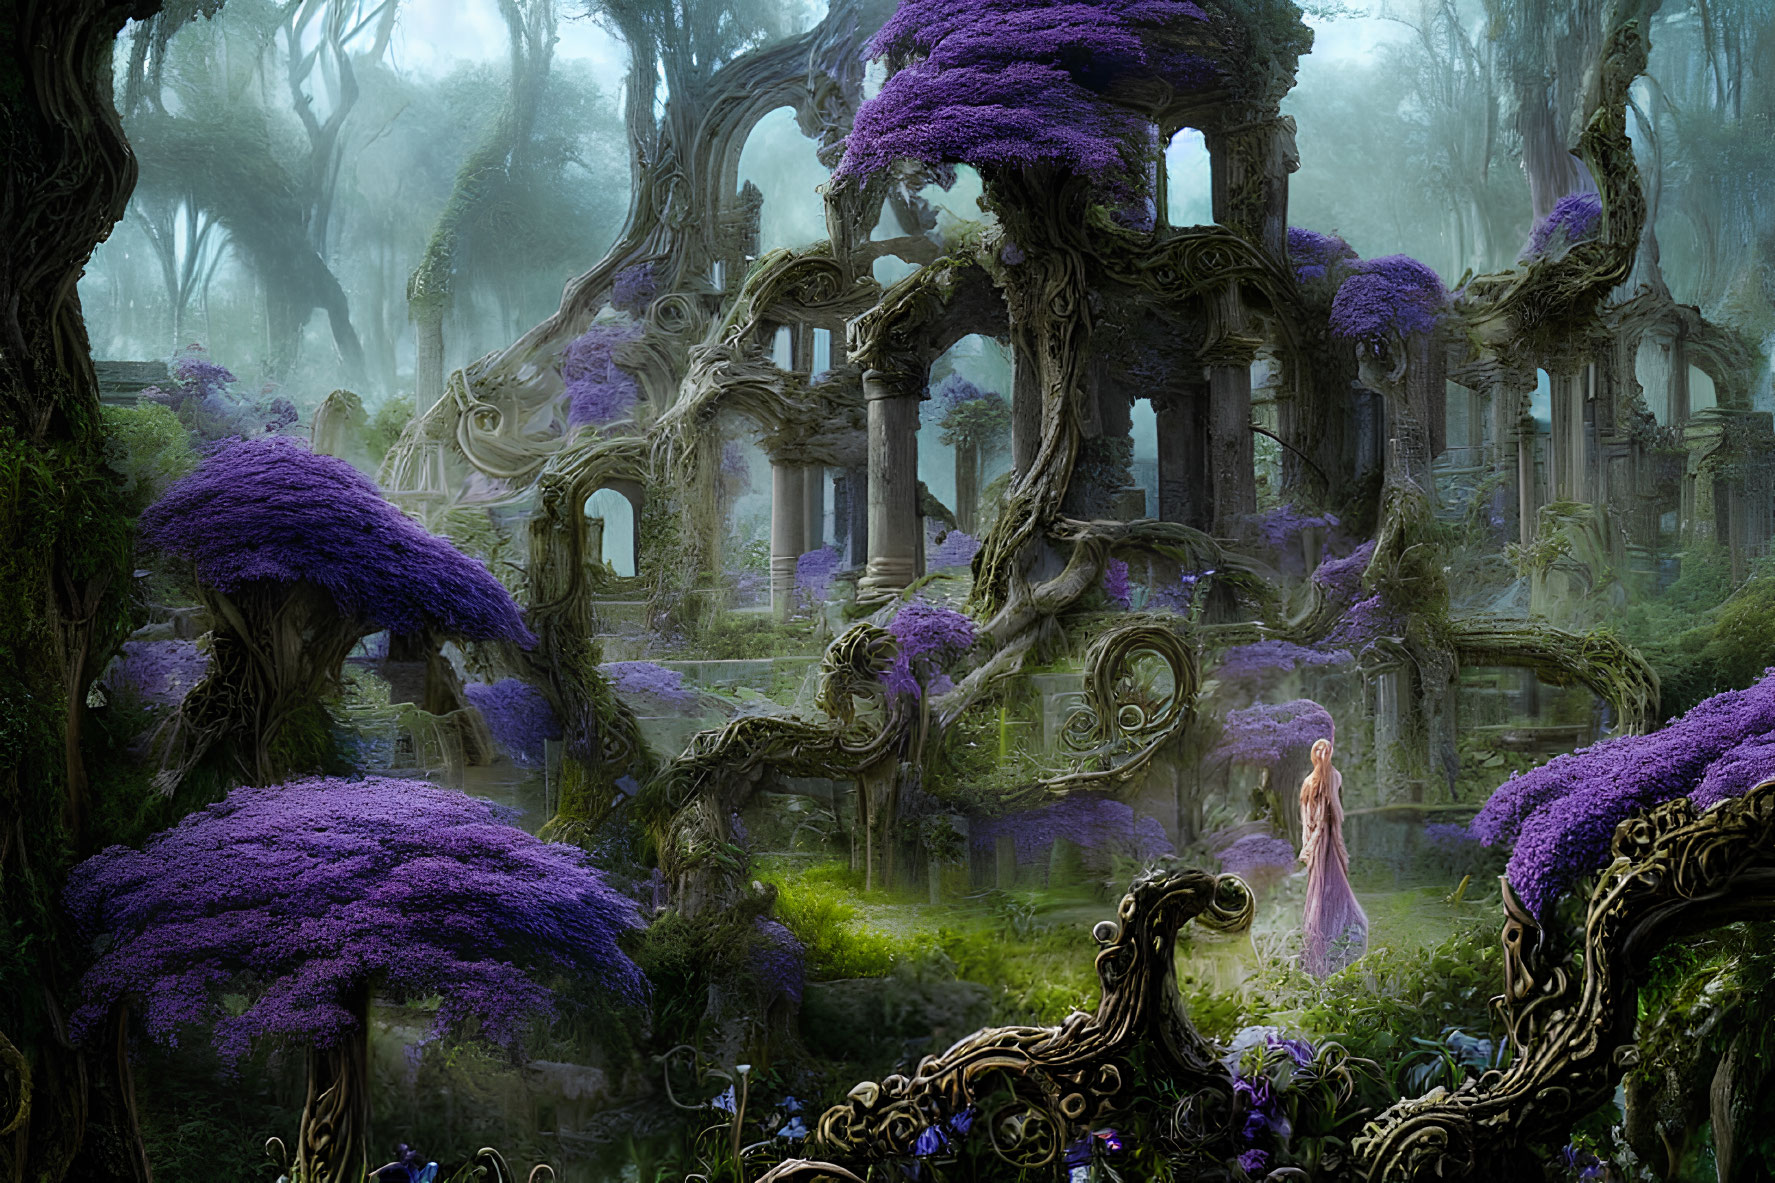 Enchanting scene: Purple foliage, ruins, river, fog, and woman in dress